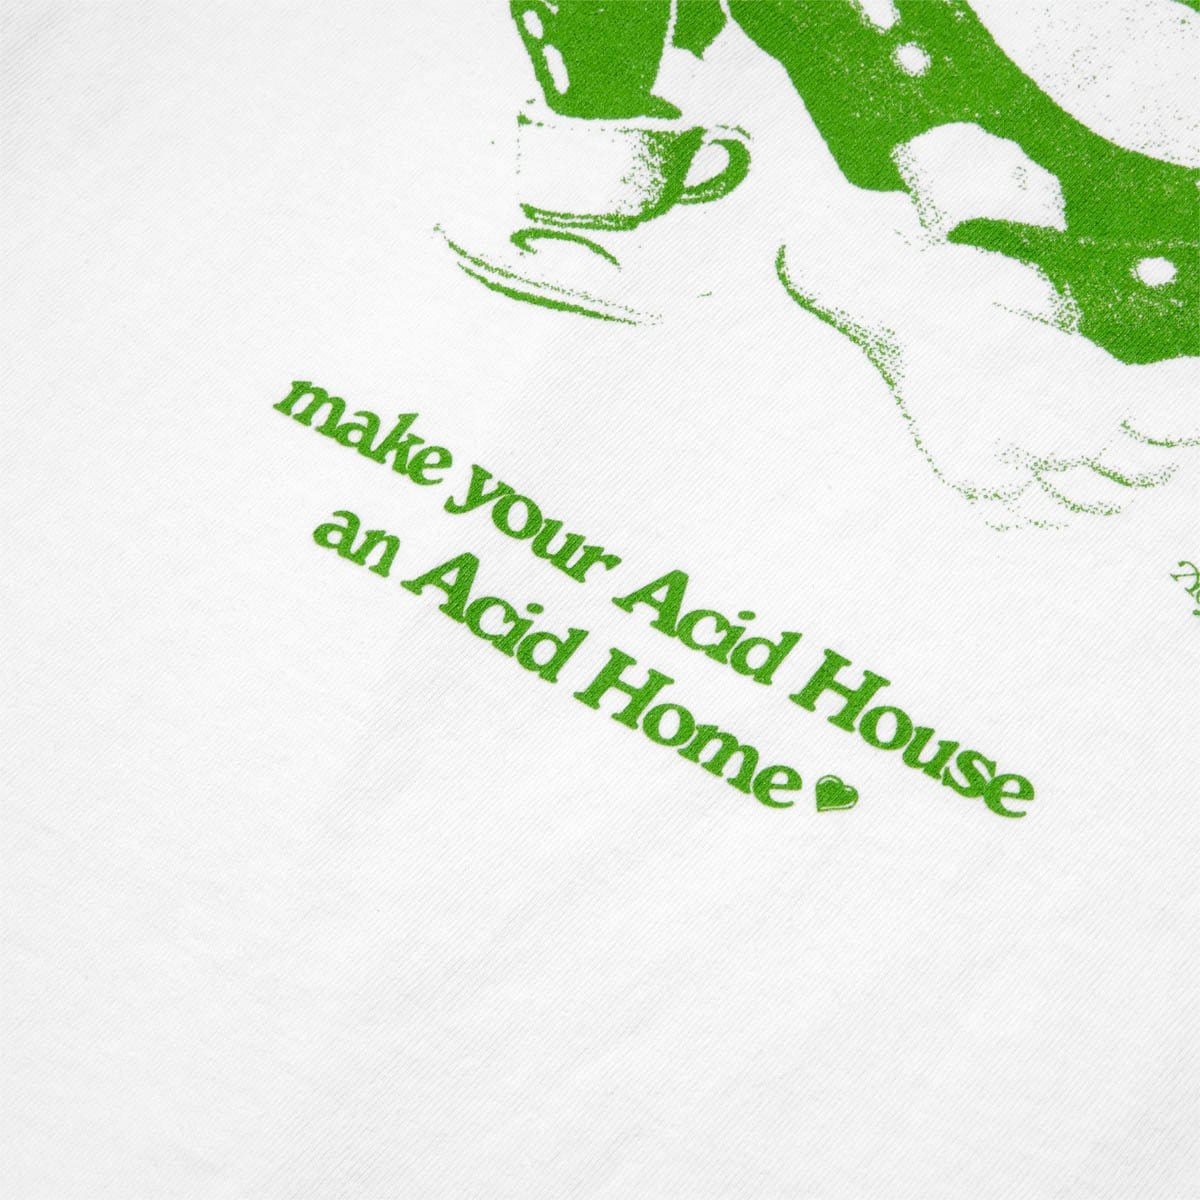 Mister Green T-Shirts ACID HOME TEE